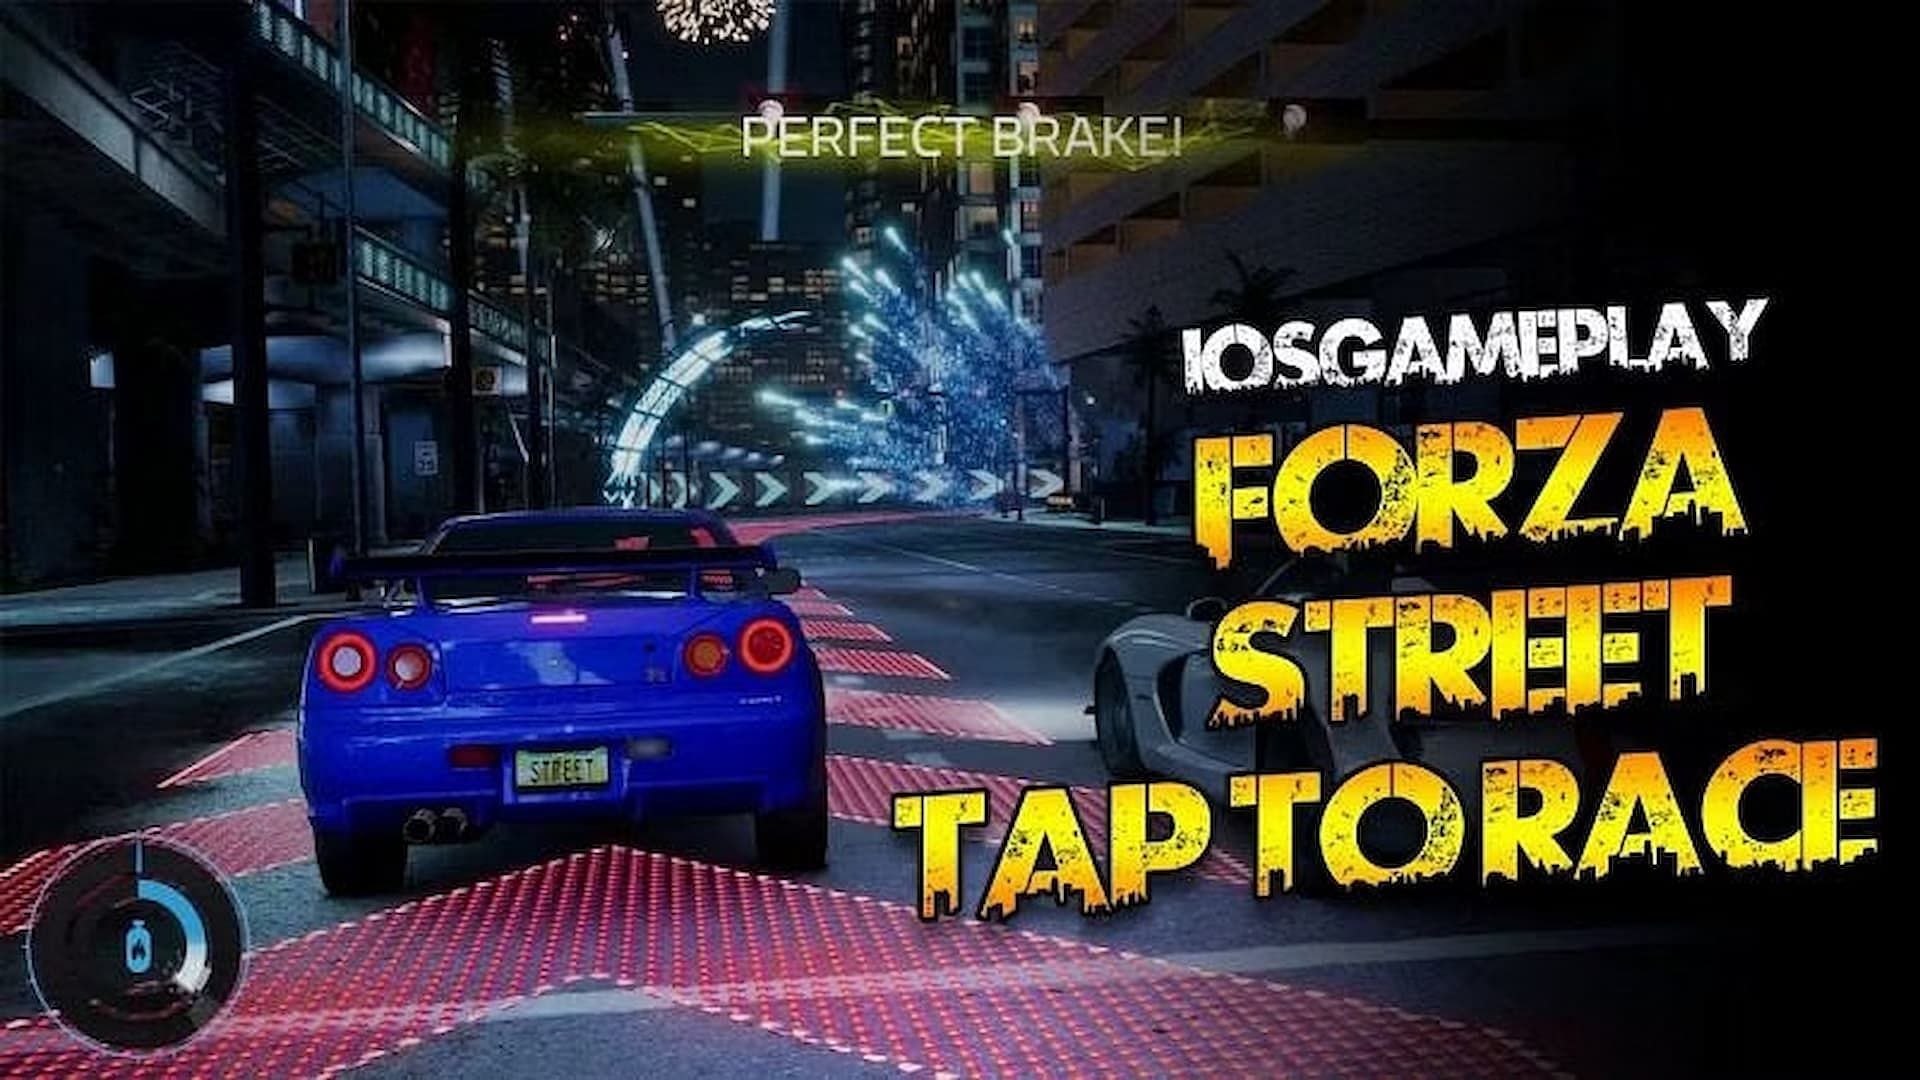 Forza Street: Tap Racing Game (Image via IOSGAMEPLAY/YouTube)